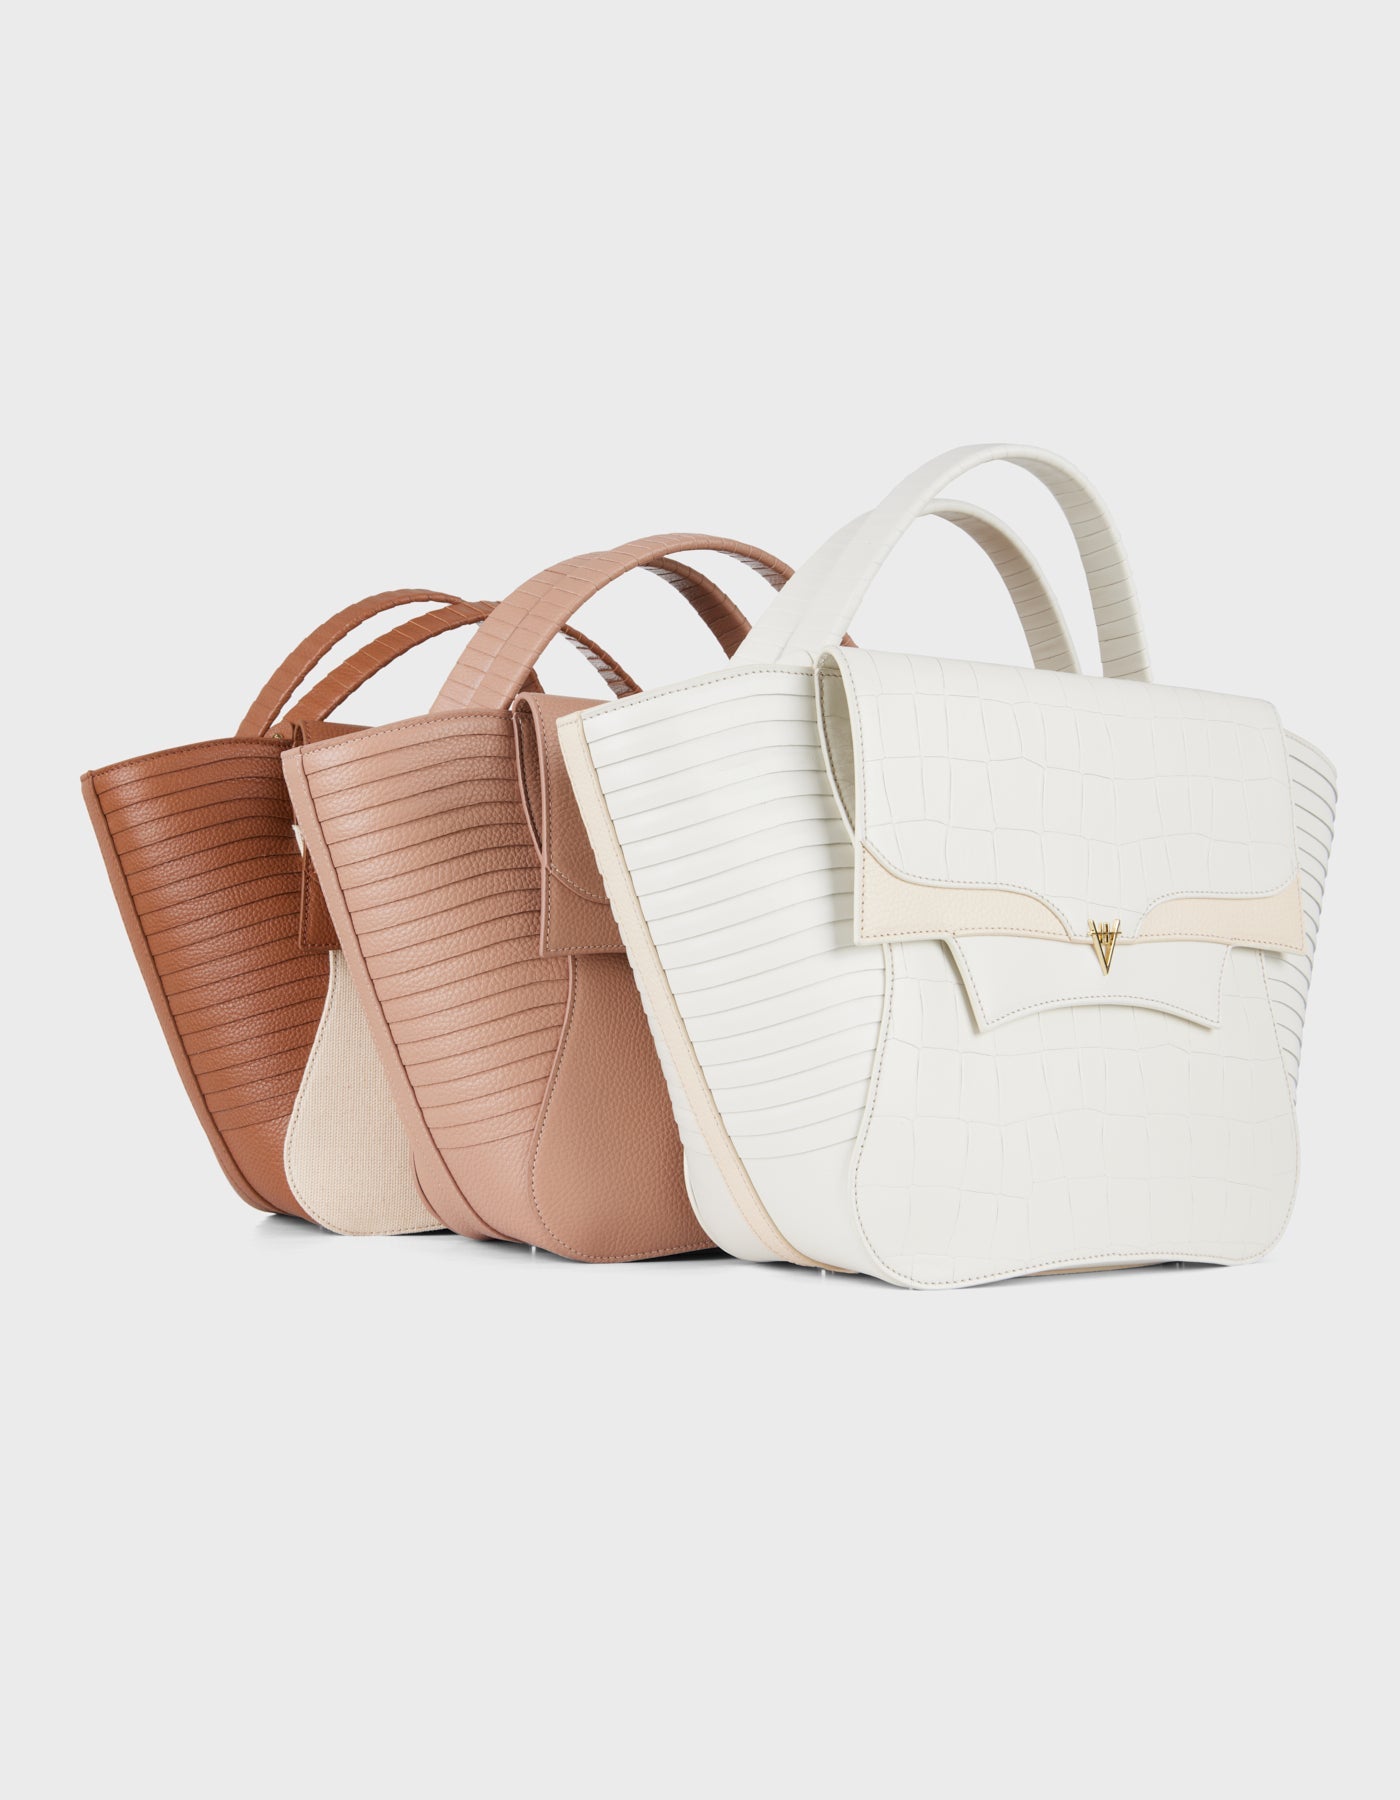 Hiva Atelier | Orbis Tote Bag Peach Sand | Beautiful and Versatile